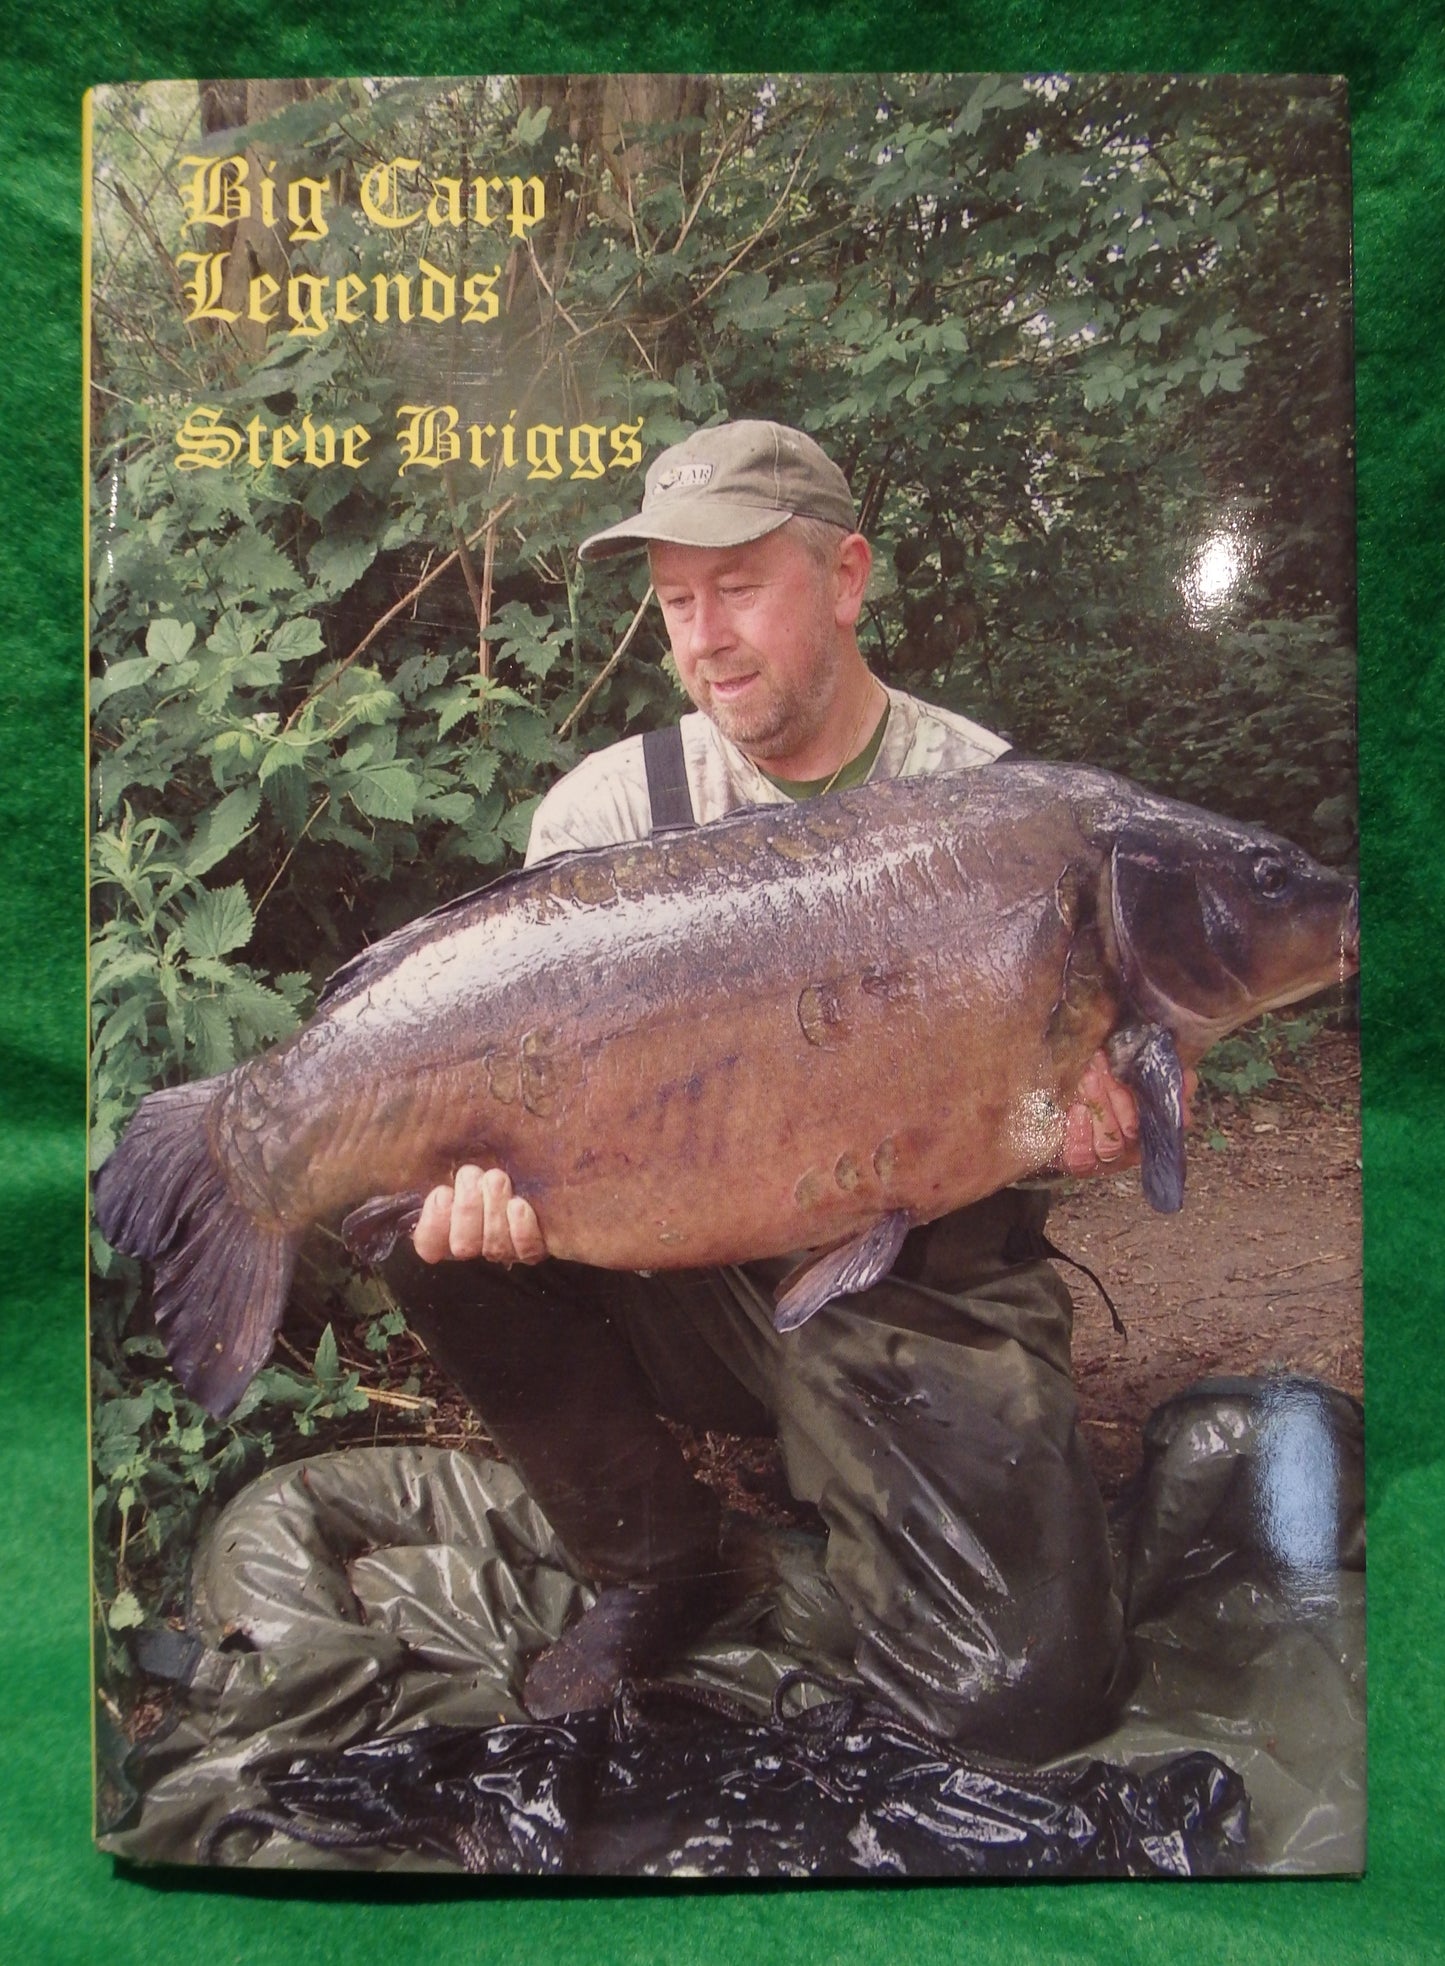 Big Carp Legends - Steve Briggs